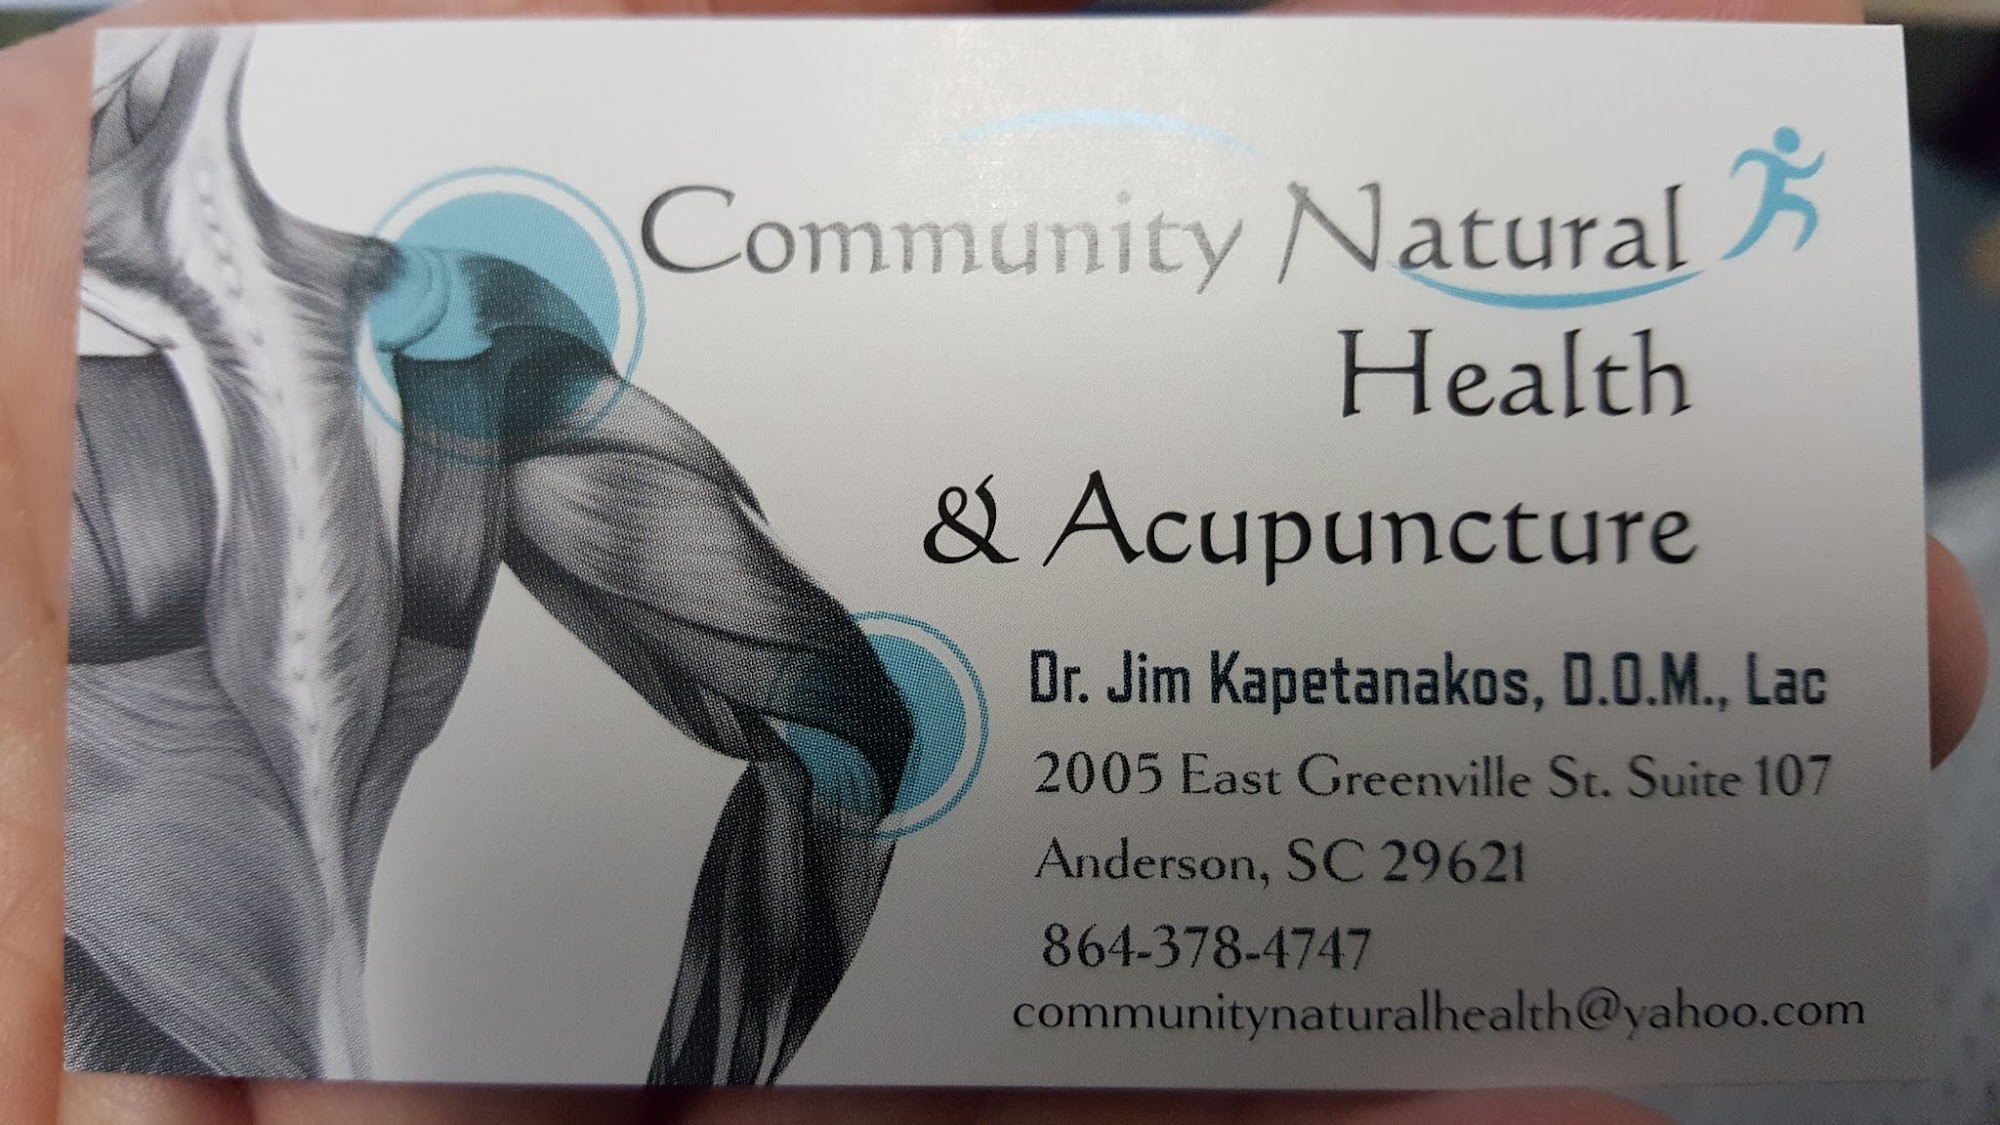 Community Natural Health and Acupuncture - James Kapetanakos